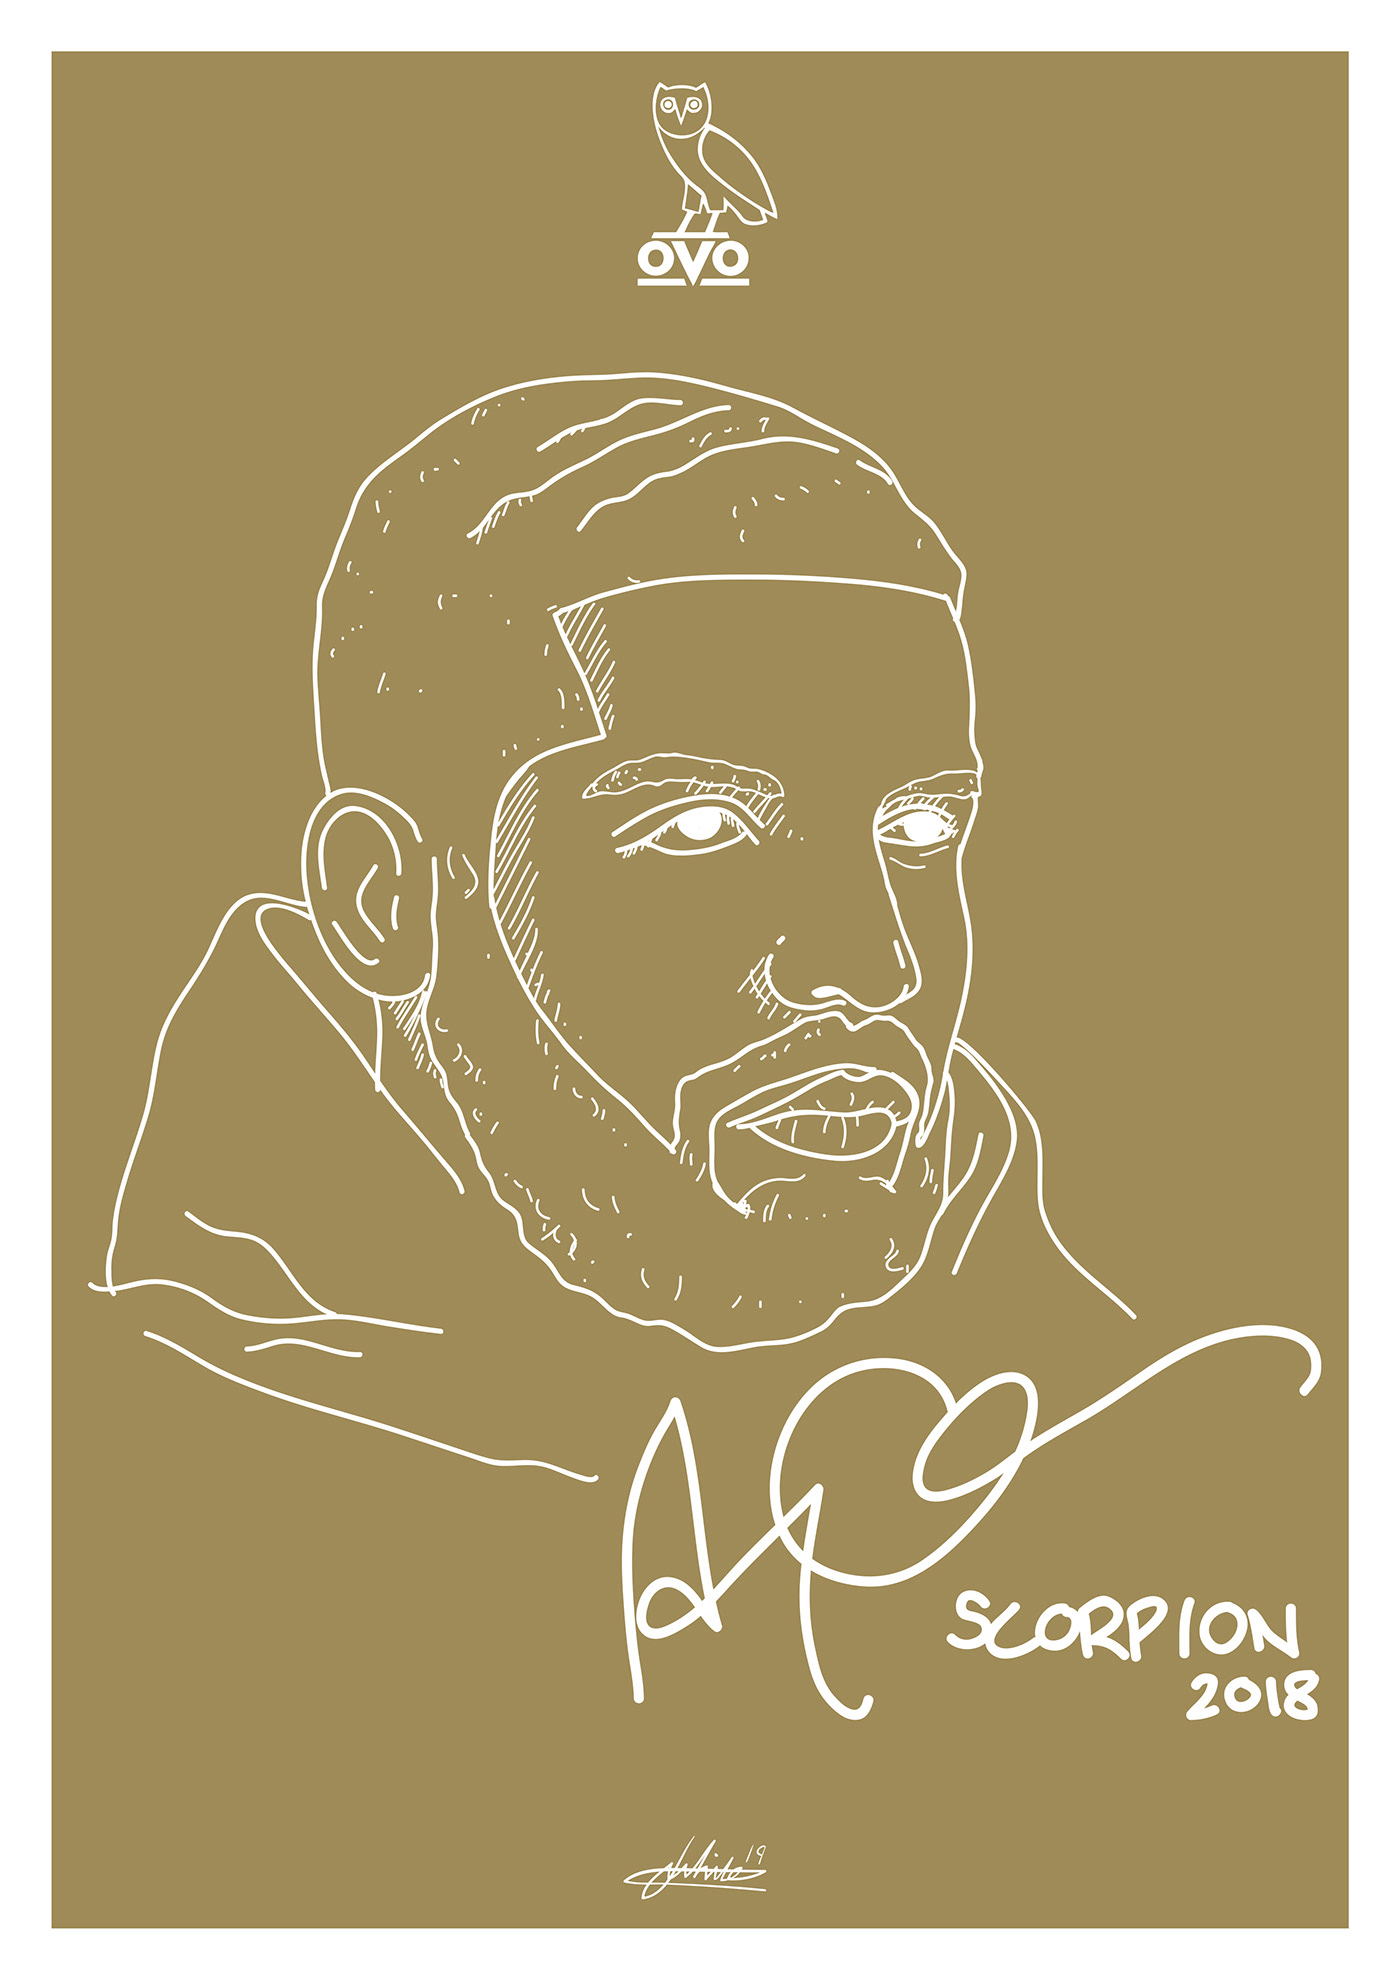 Drake rap line art scorpion hip hop Nike ovo gold king